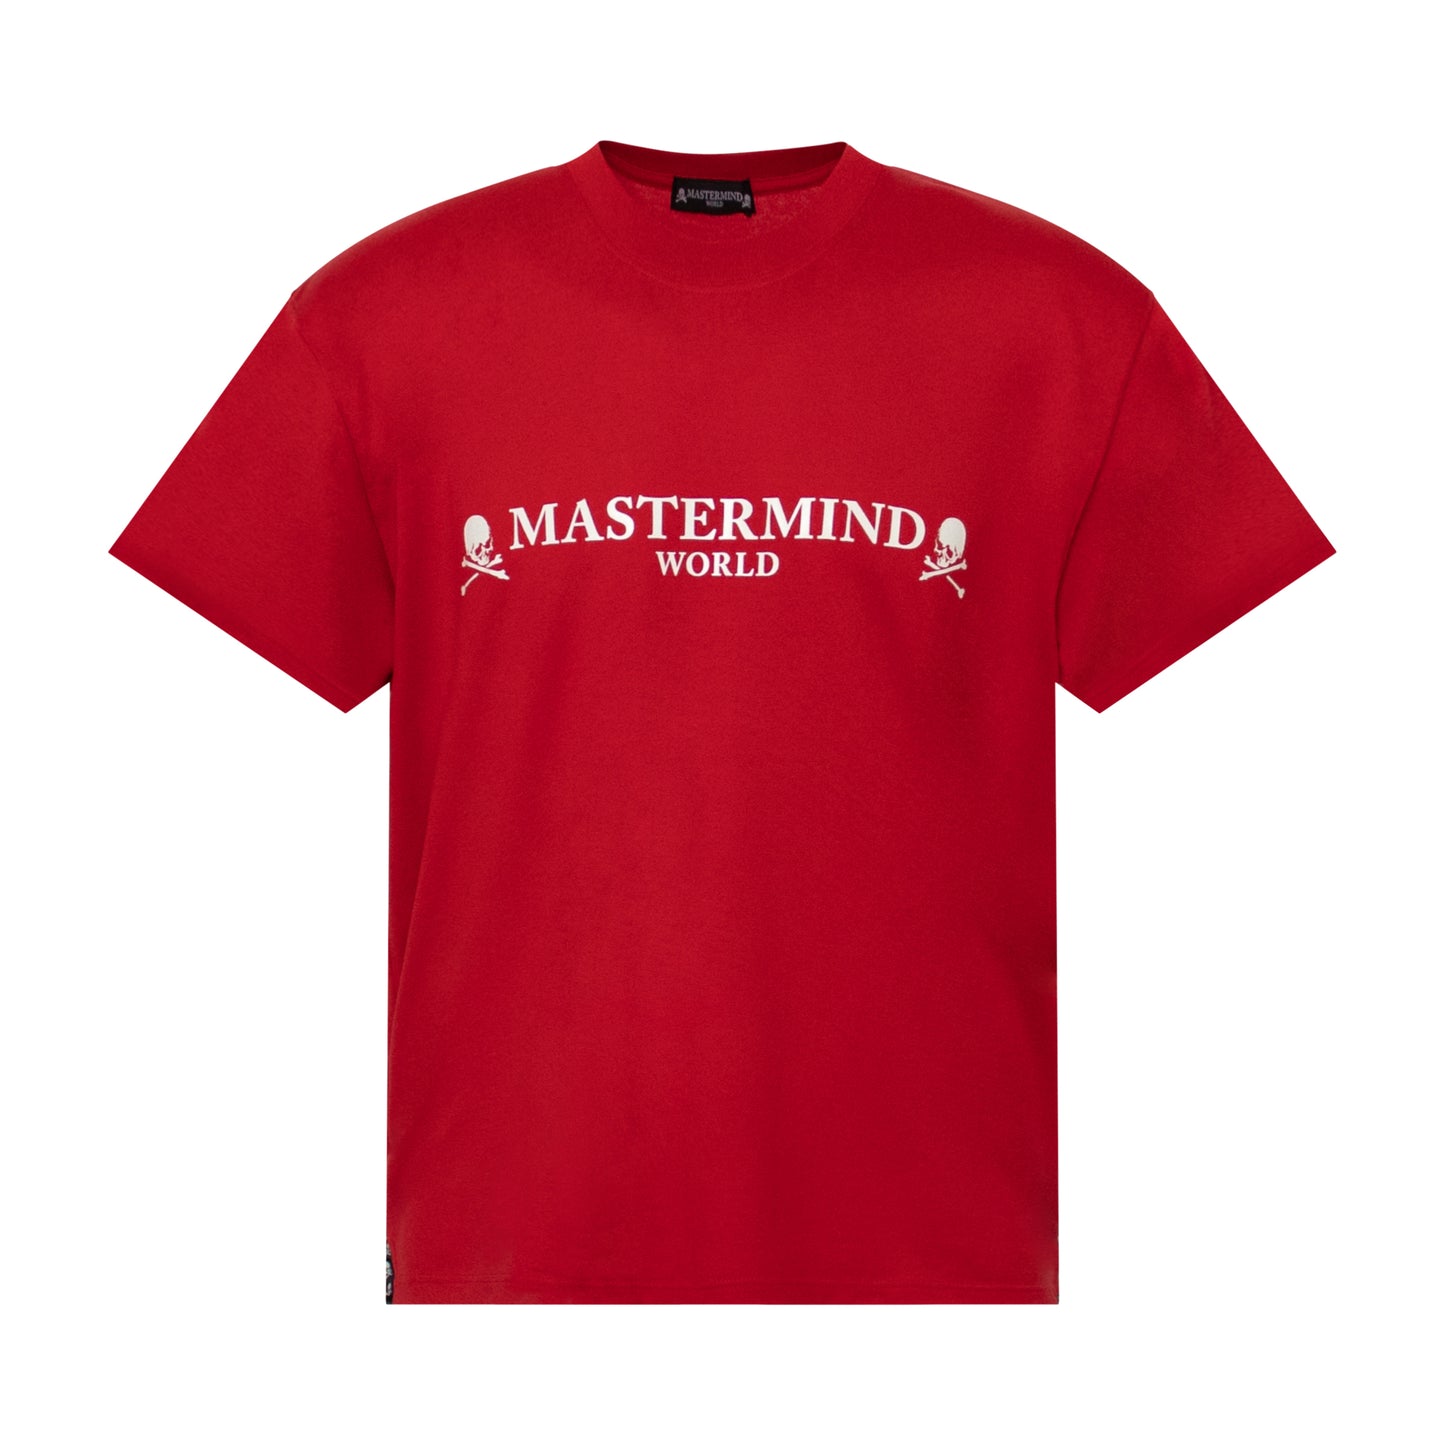 Mastermind World T-Shirt in Red